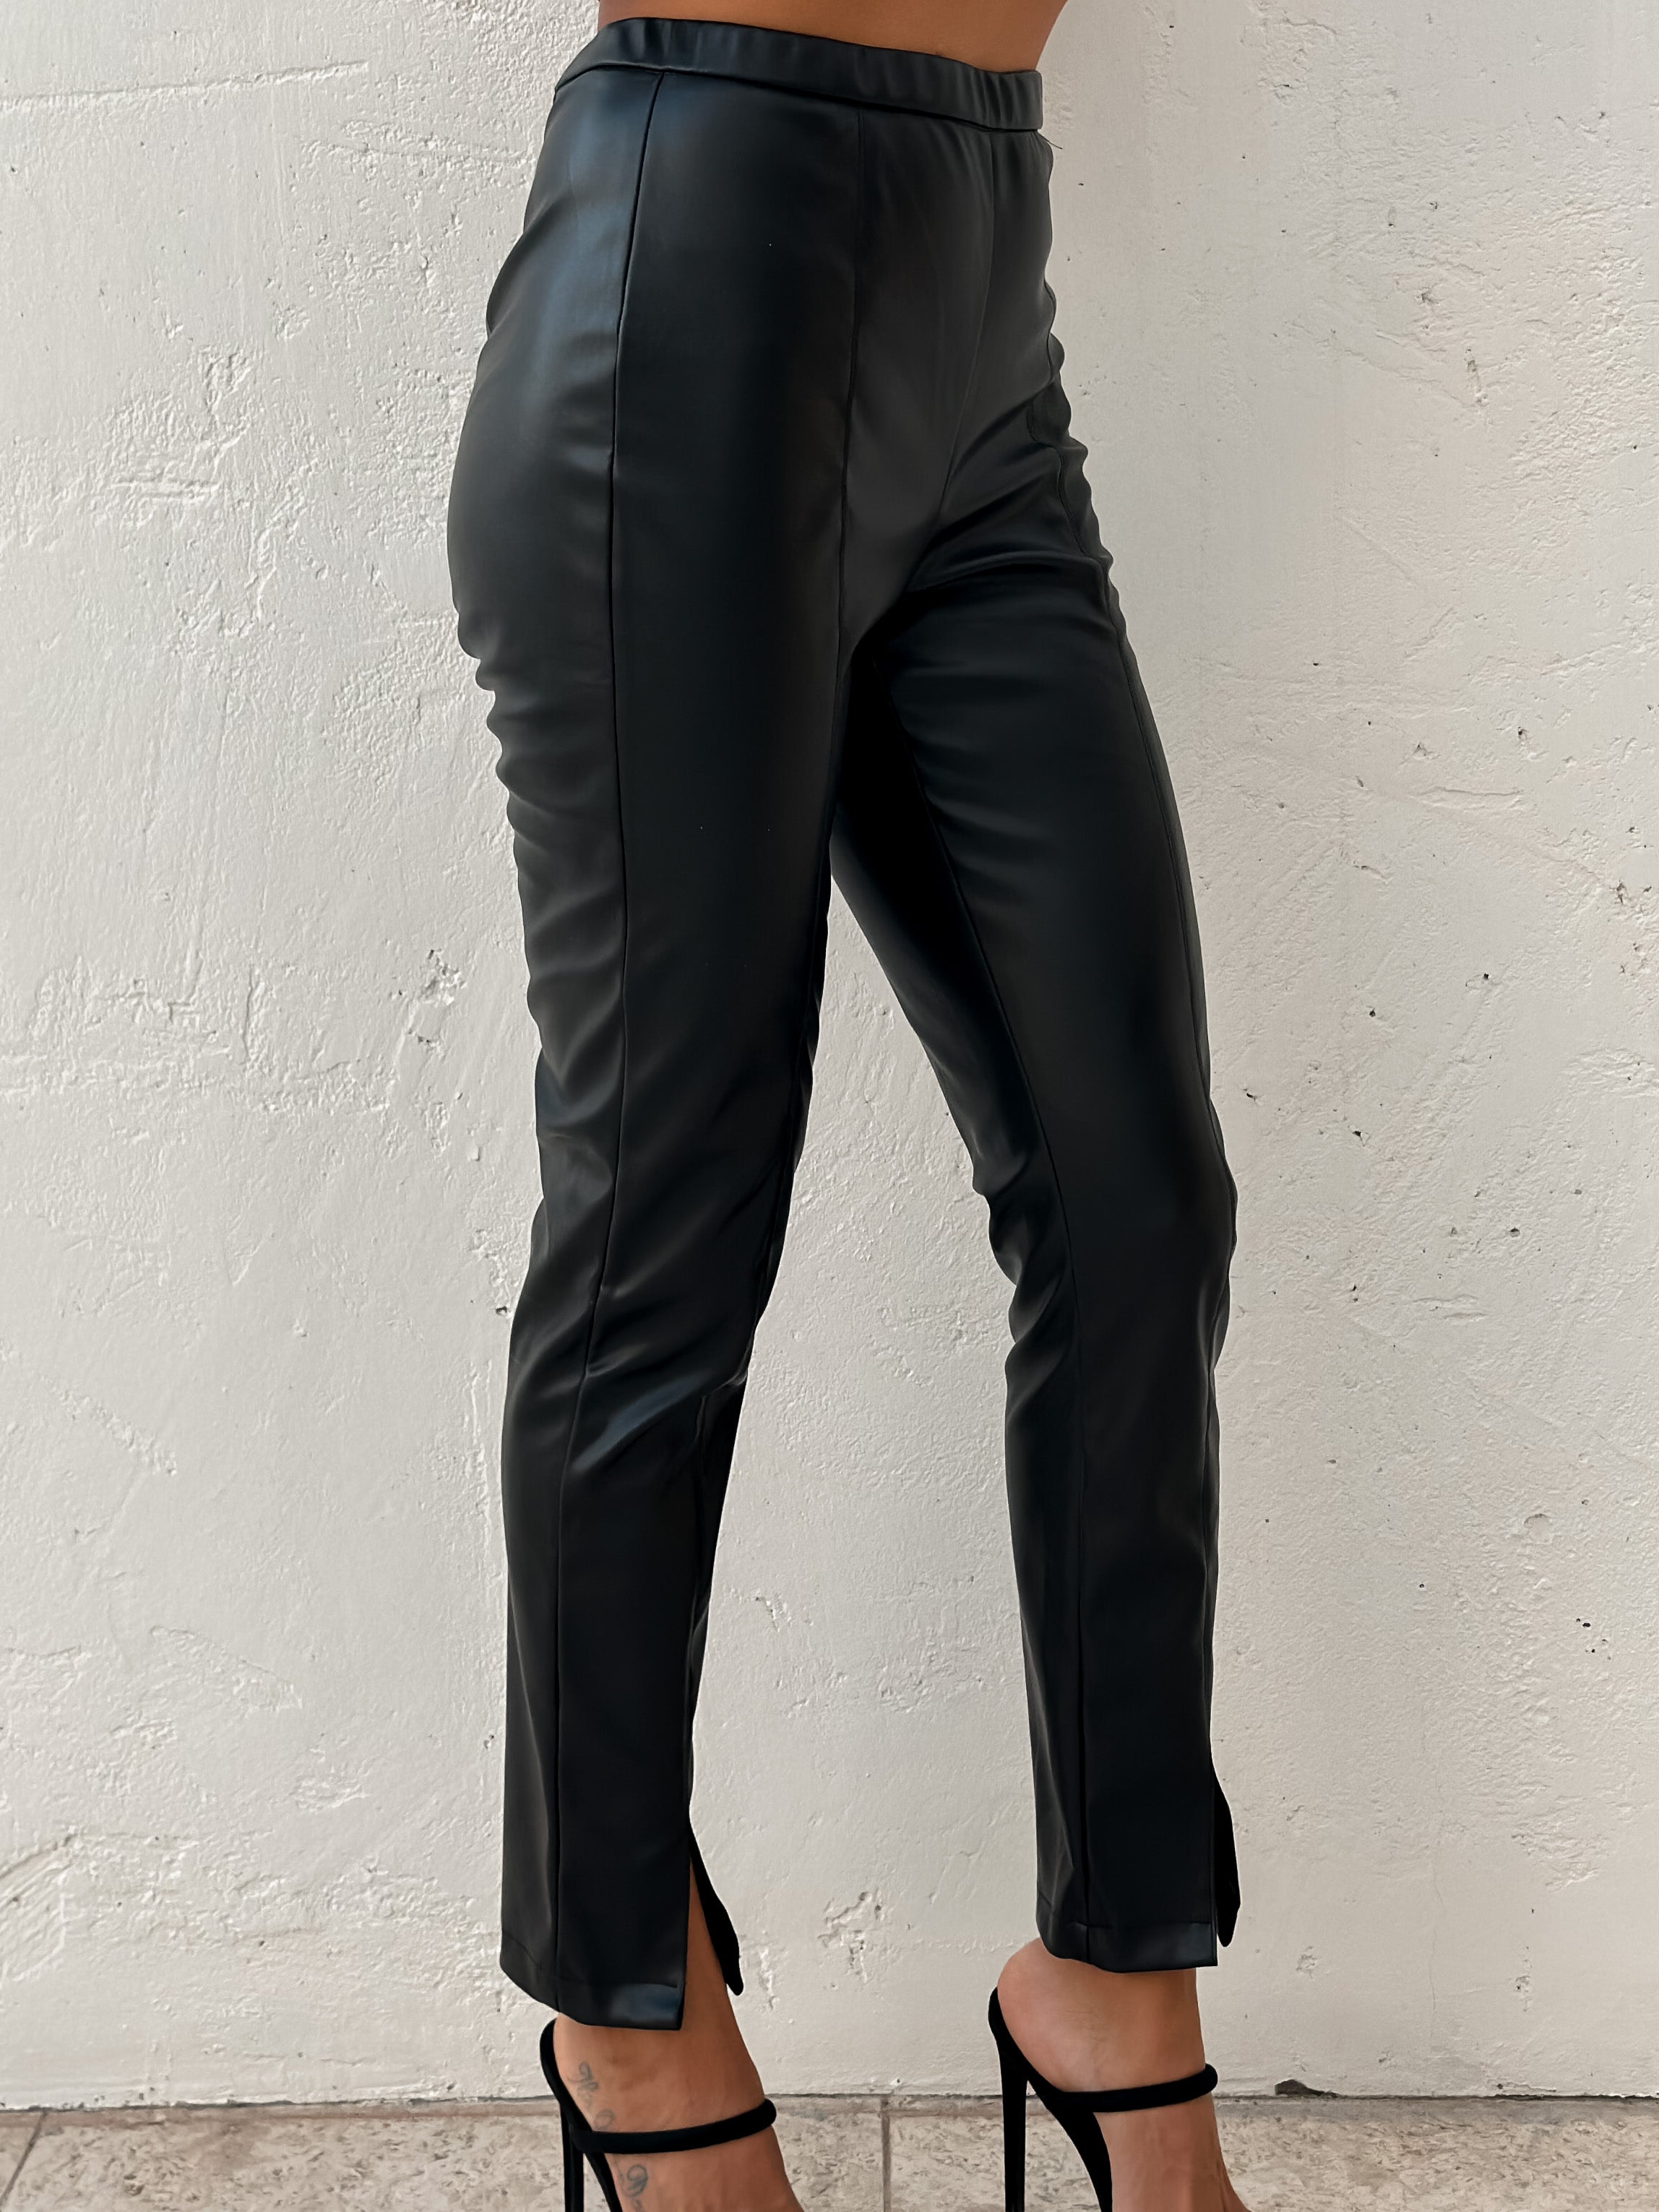 skinny leather pleather slit front pants leggings